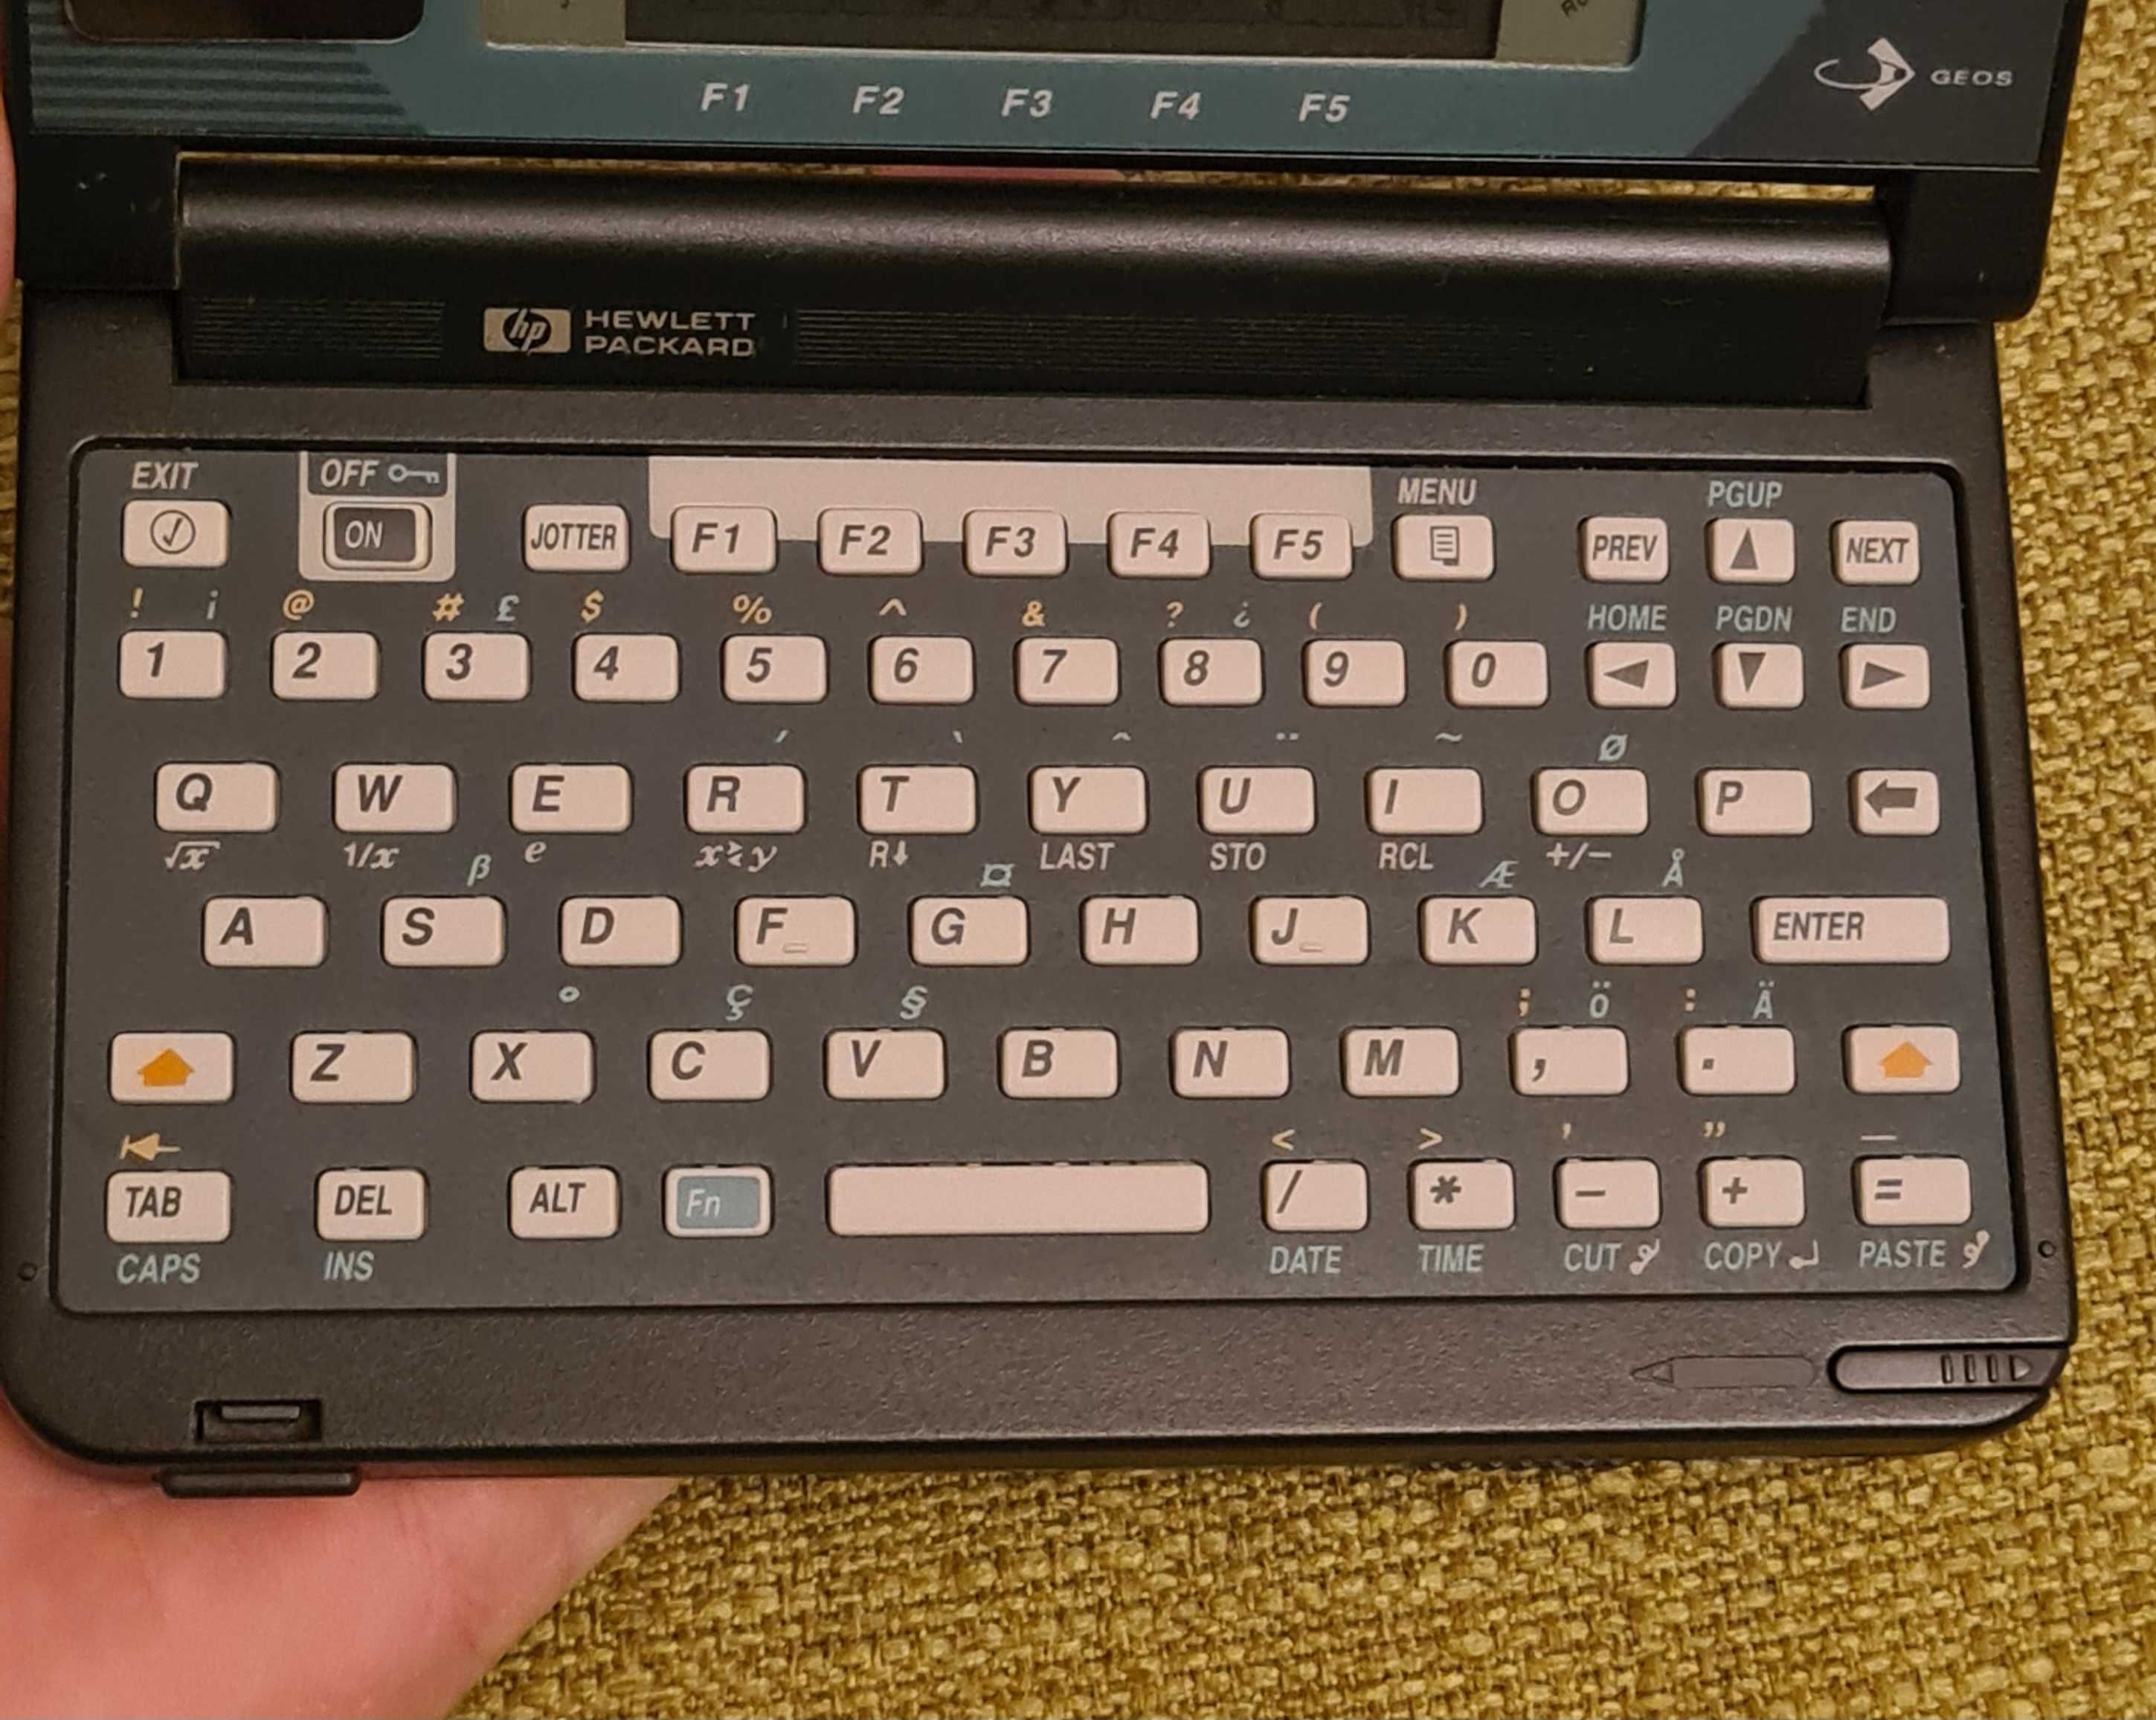 HP OmniGo 100 Mini Laptop PC Vechi Vintage Organizator PDA De Colectie